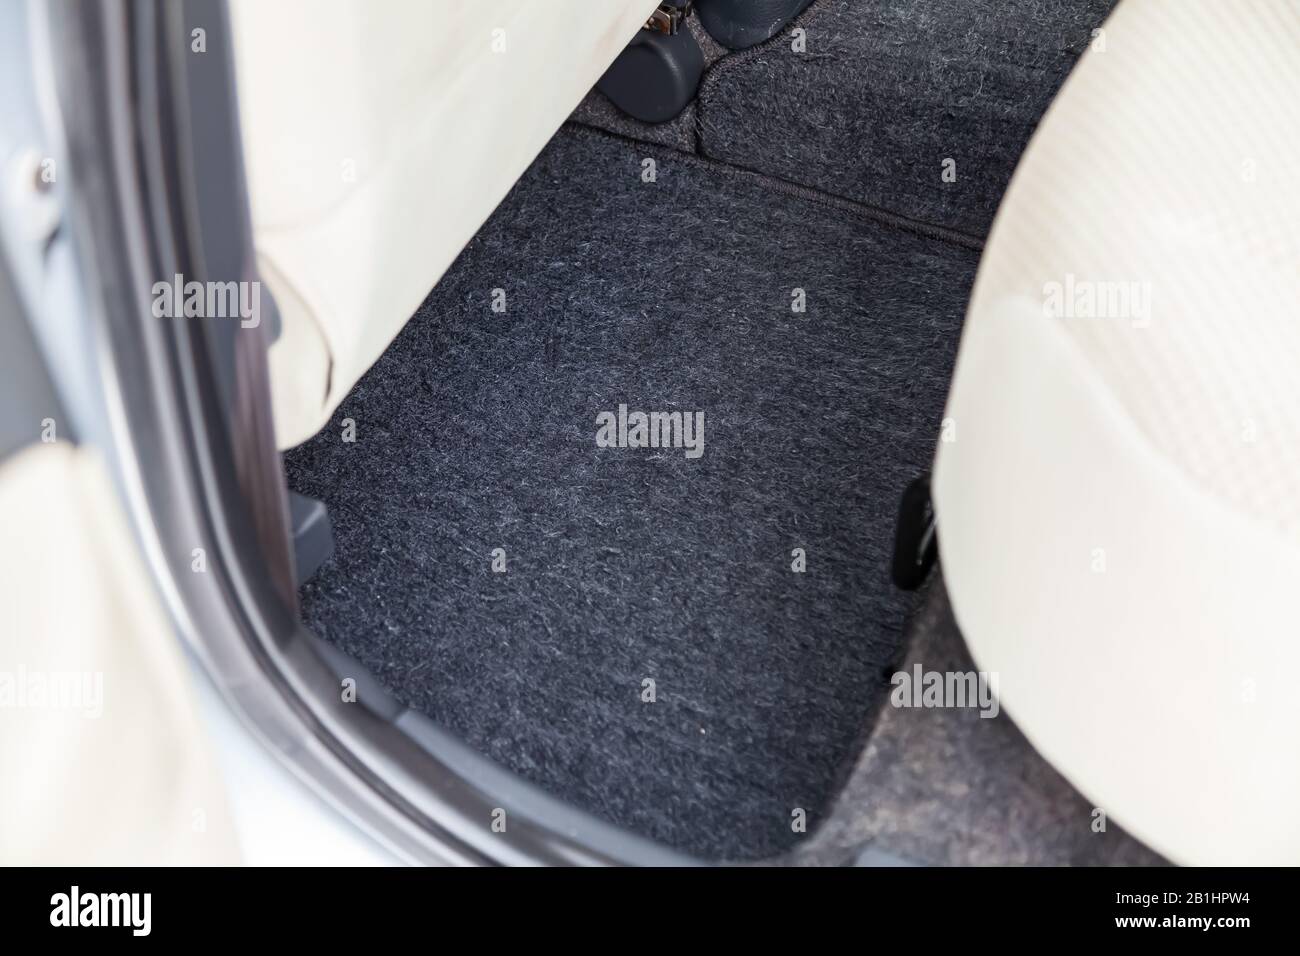 Clean Car Floor Mats Of Black Carpet Under Rear Passenger Seat In